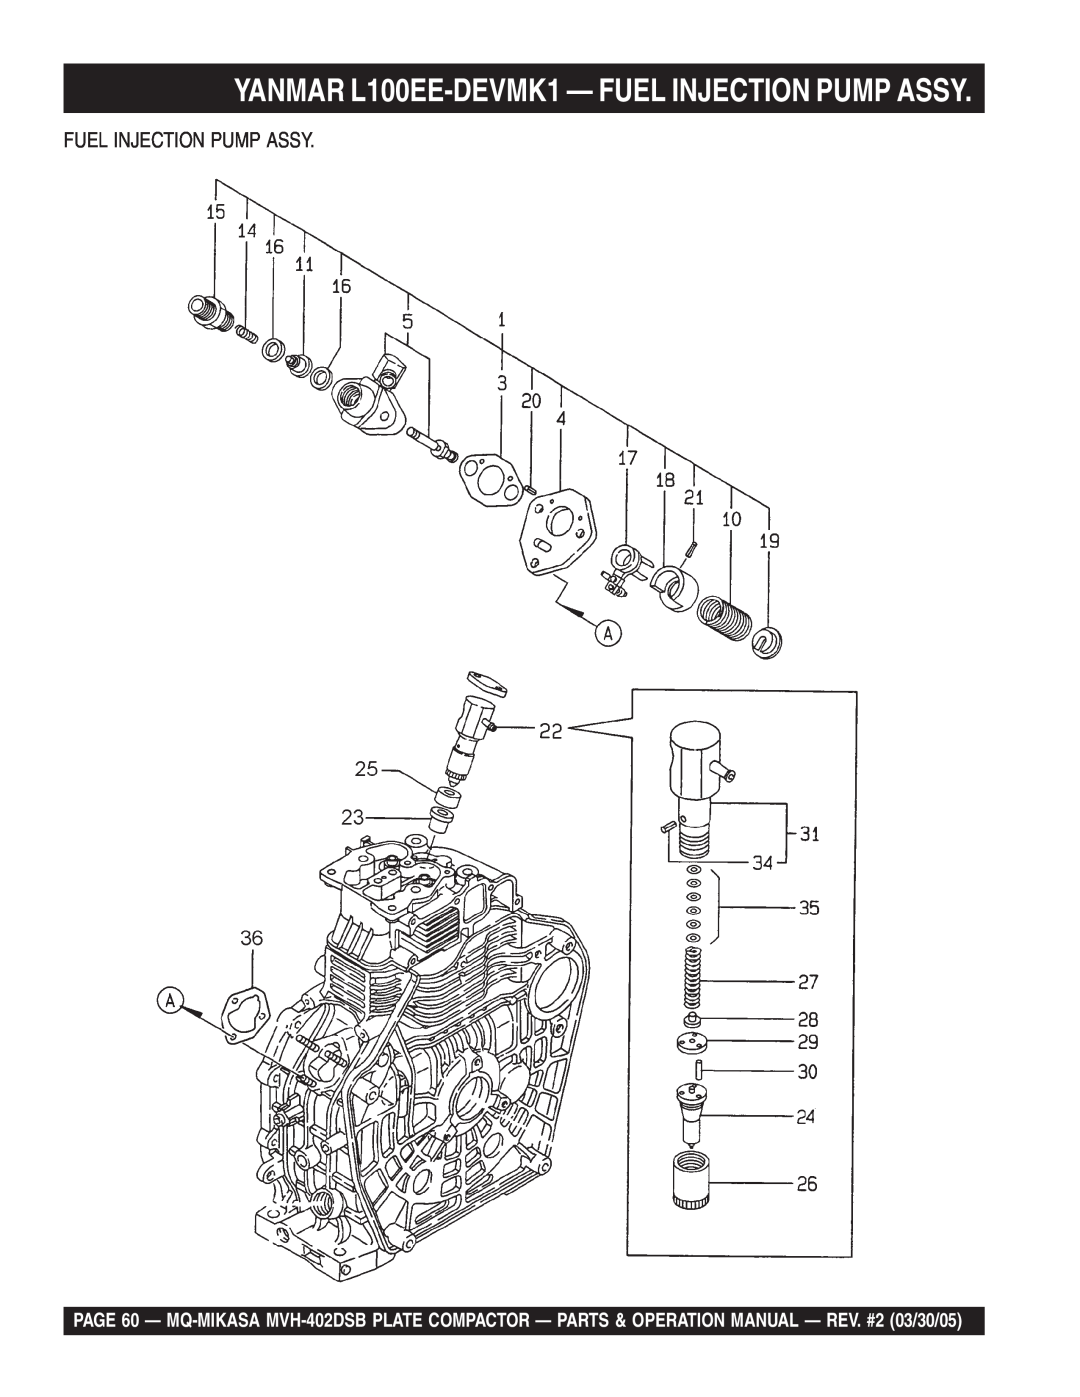 Multiquip MVH-402DSB manual YANMAR L100EE-DEVMK1- FUEL INJECTION PUMP ASSY, Fuel Injection Pump Assy 